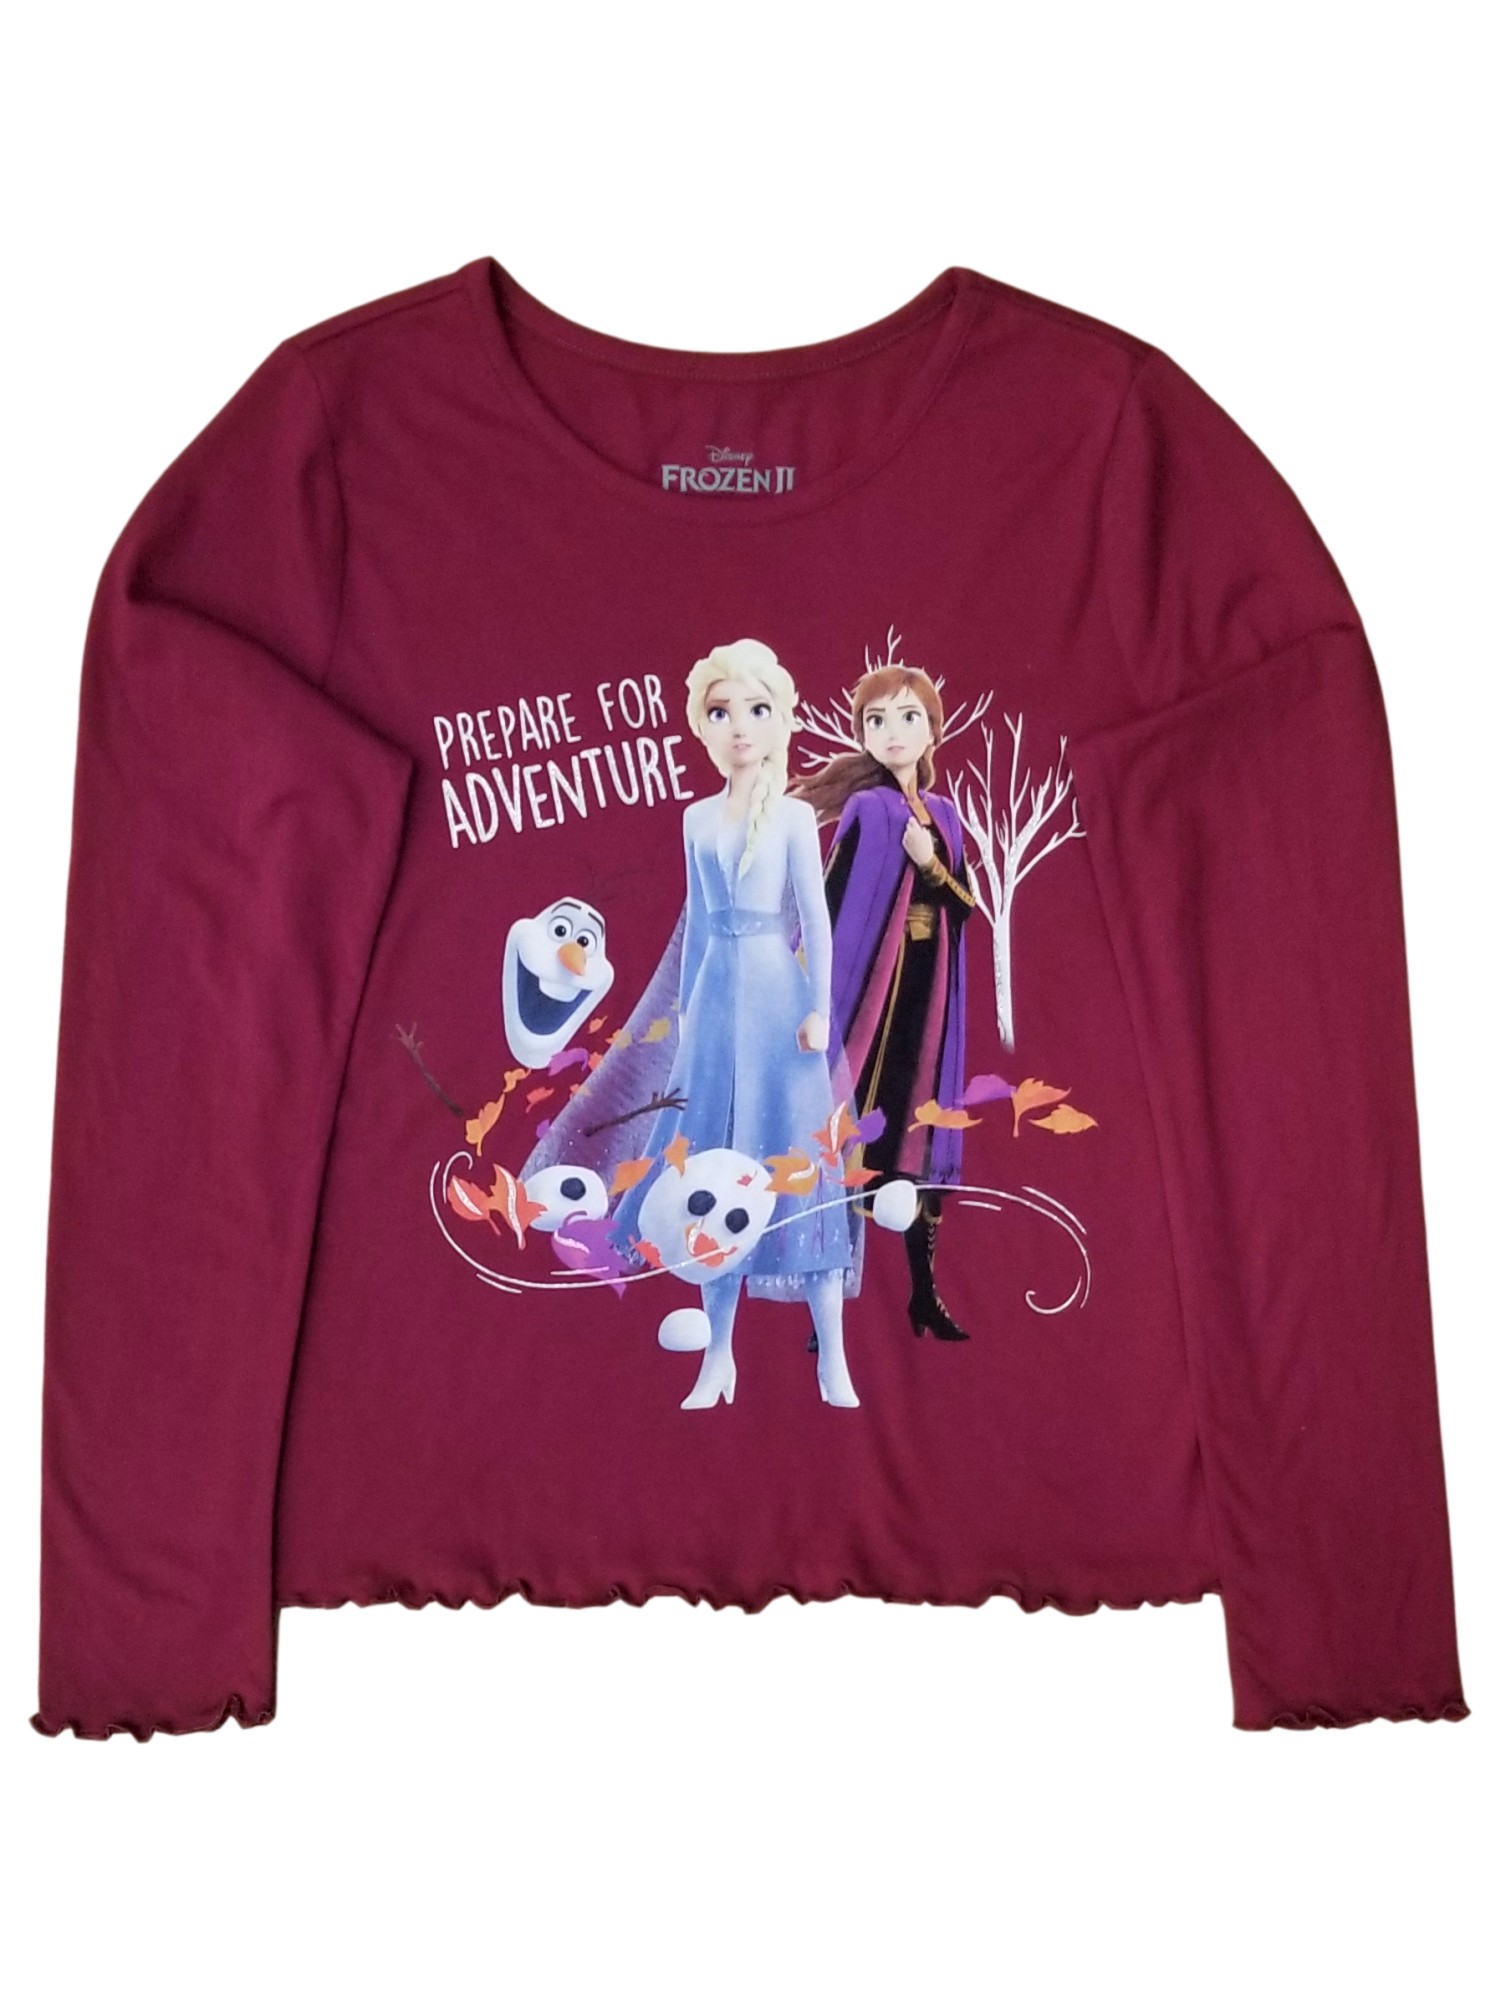 Disney Girls Frozen 2 Elsa Anna Olaf Maroon Red Long Sleeve Tee T-Shirt XL 14-16